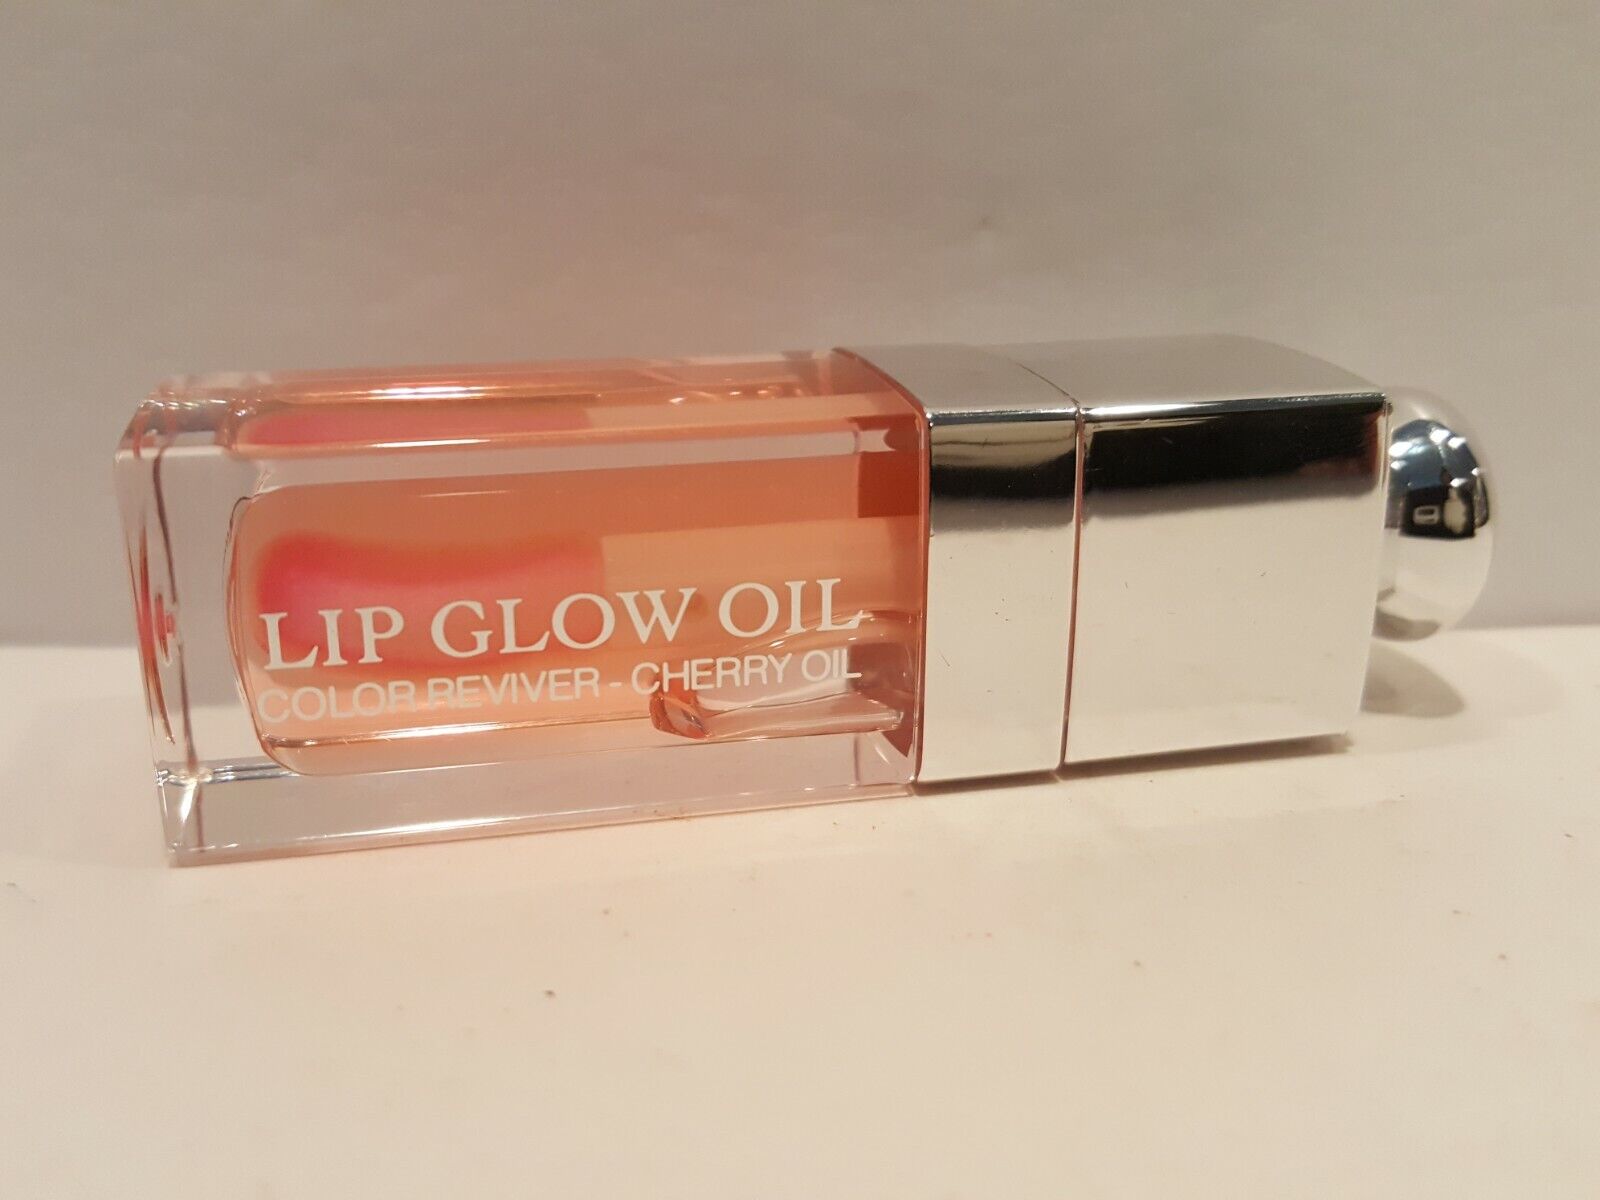 Dior-Dior Addict-Lip Glow Oil-Color Reviver-Cherry Oil-001 Pink 0.20 fl oz-NWOB